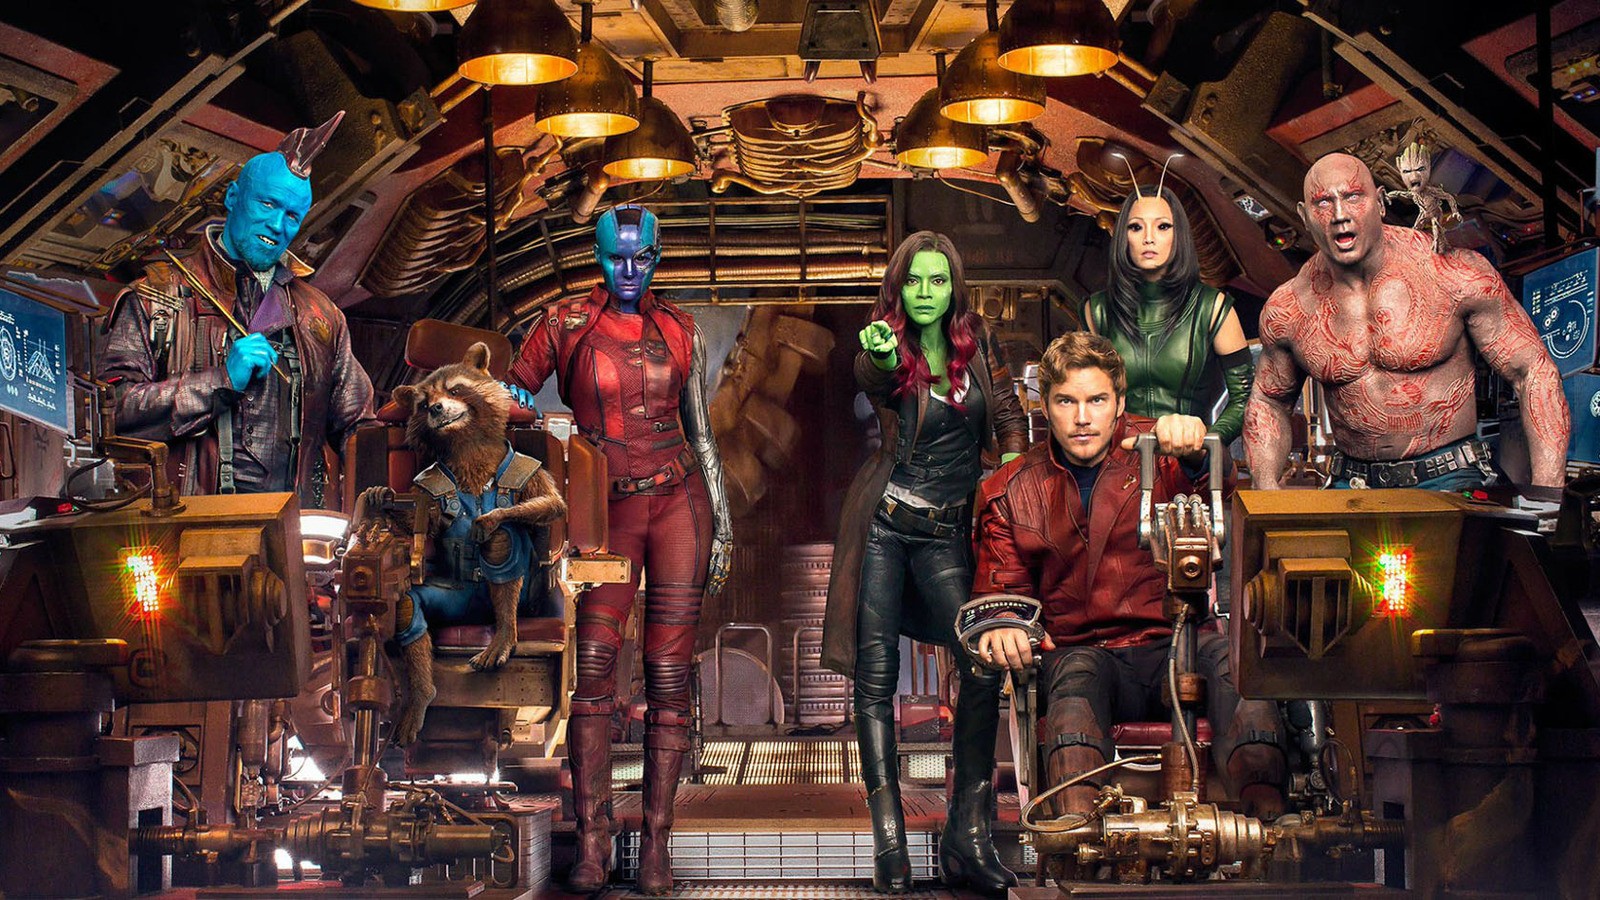 A still from James Gunn's Guardians of the Galaxy Vol. 2